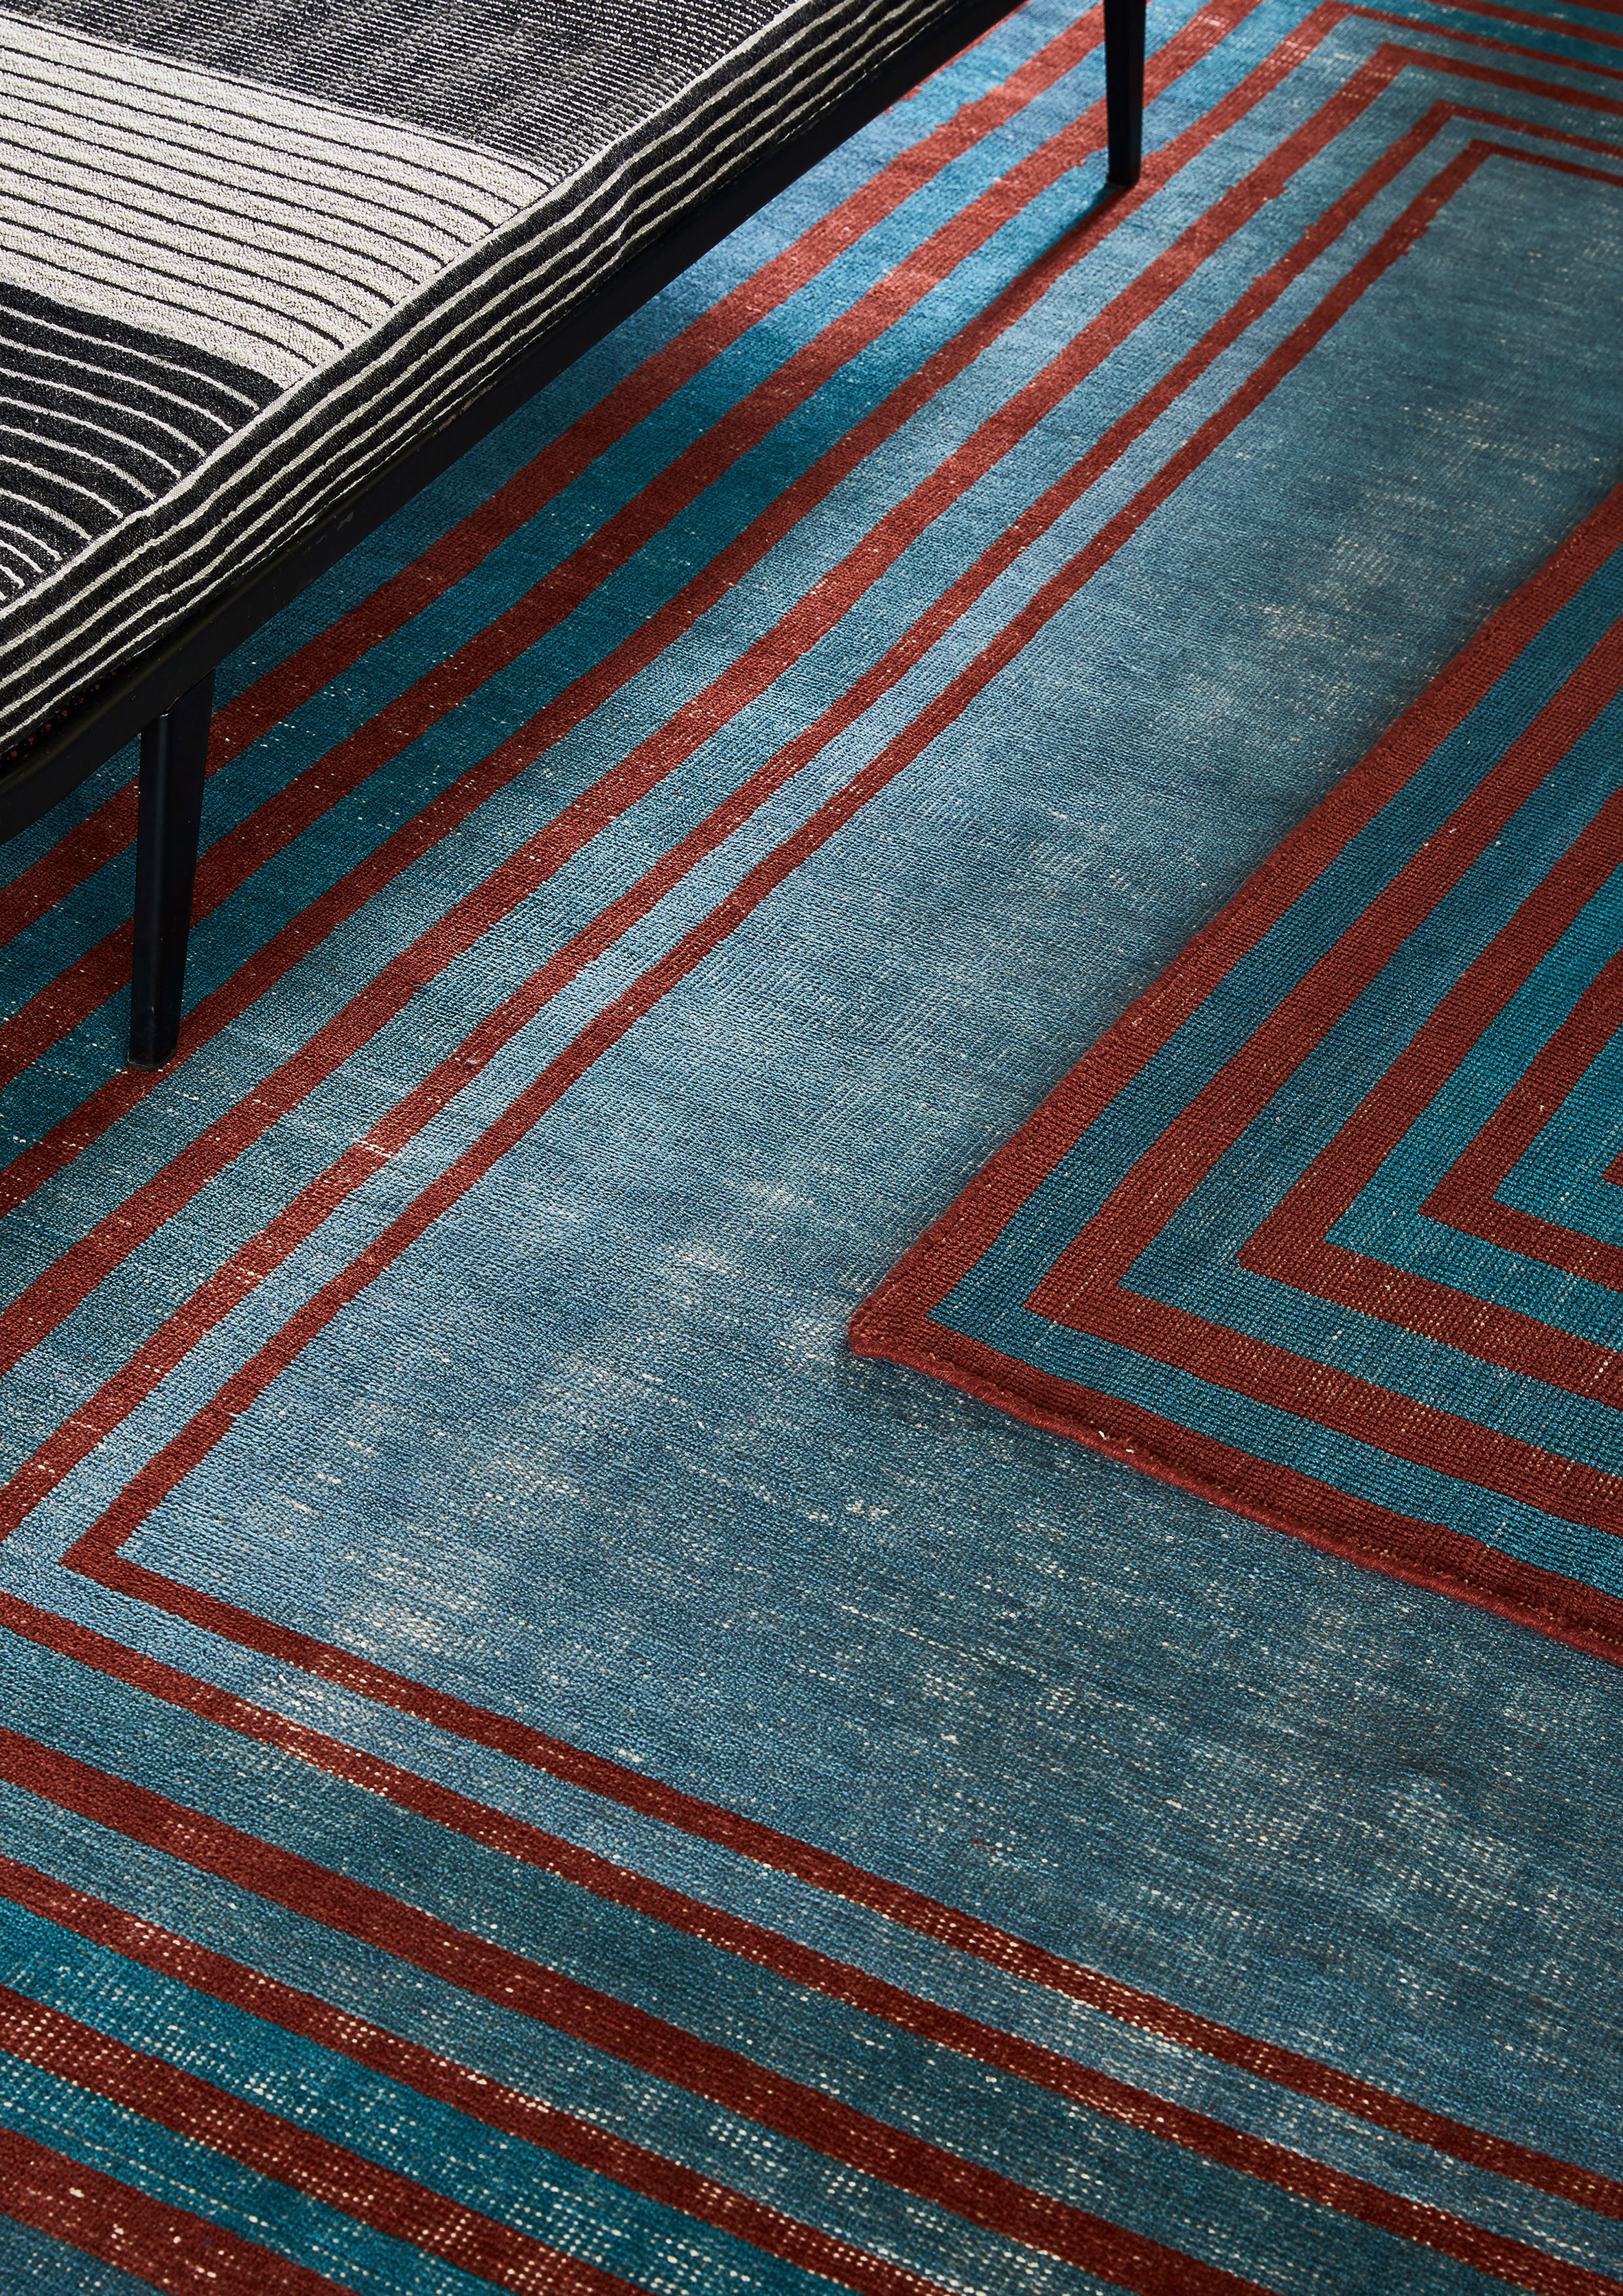 Sebastian Wrong designs modular "community of rugs" for Floor_Story